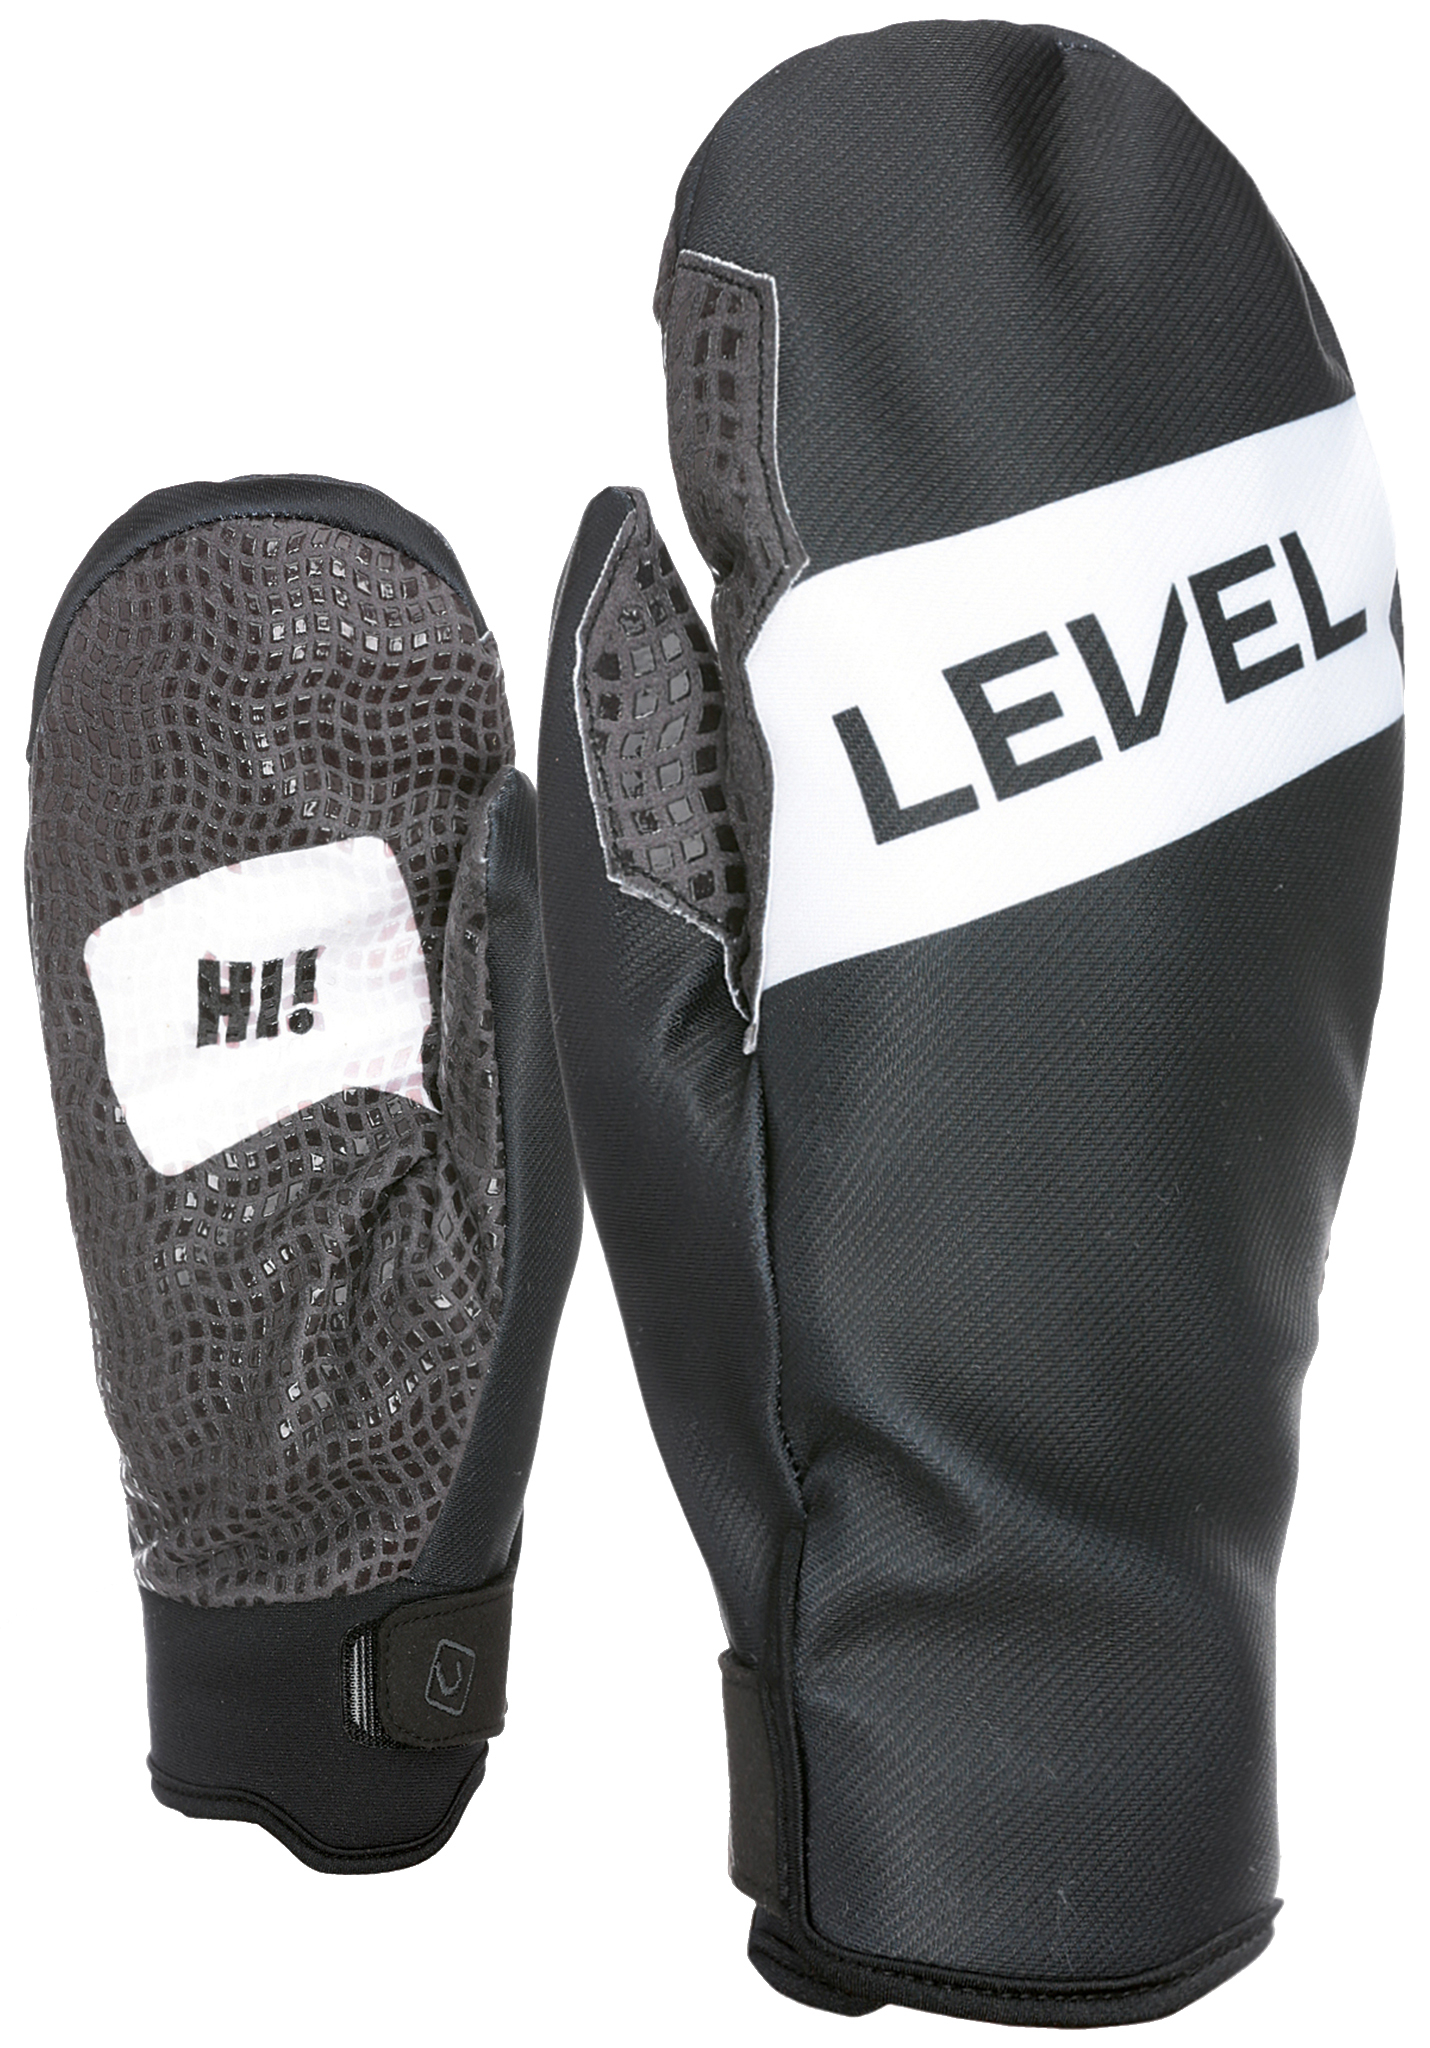 Level Web Mitt Snowboard Handschuhe black-grey S/M